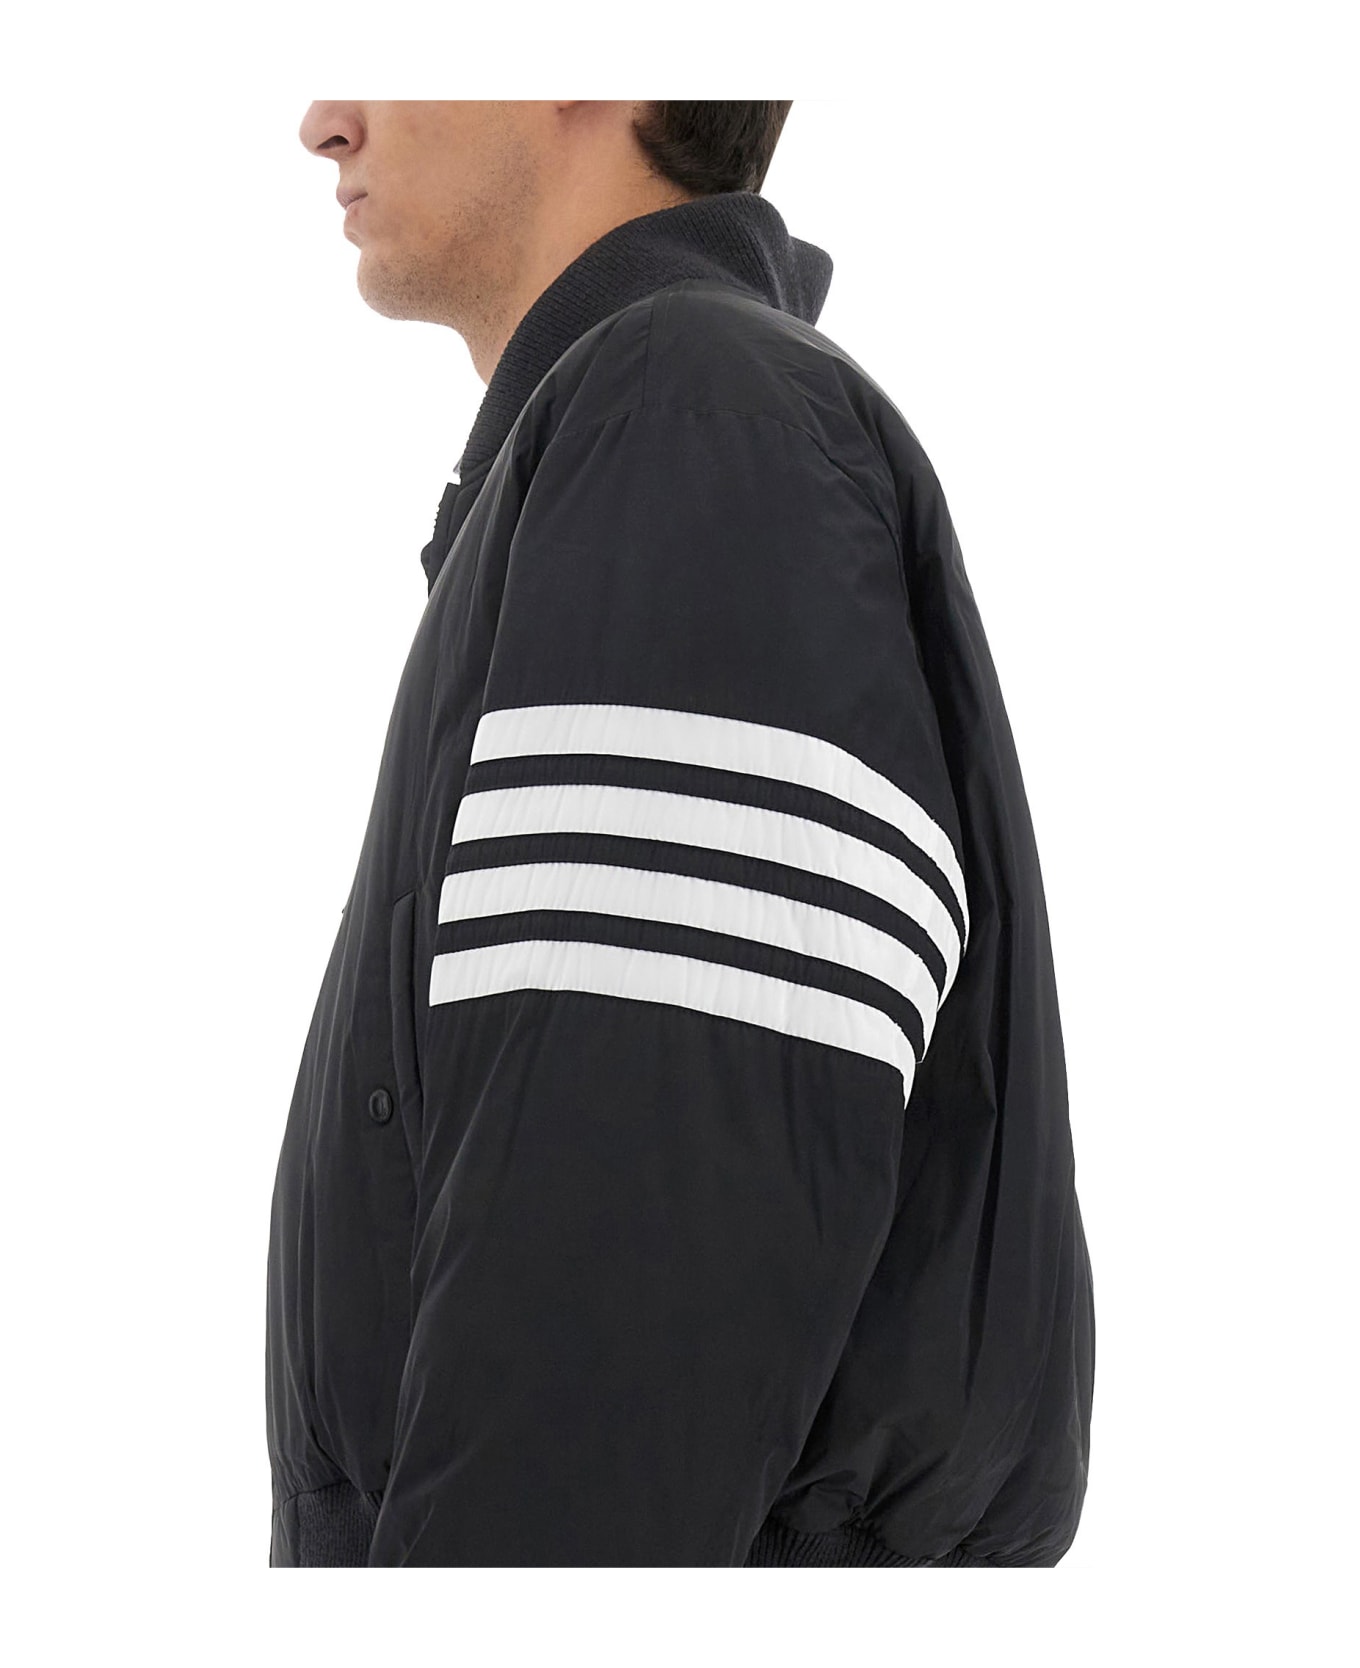 Thom Browne Oversize Jacket - Charcoal ジャケット